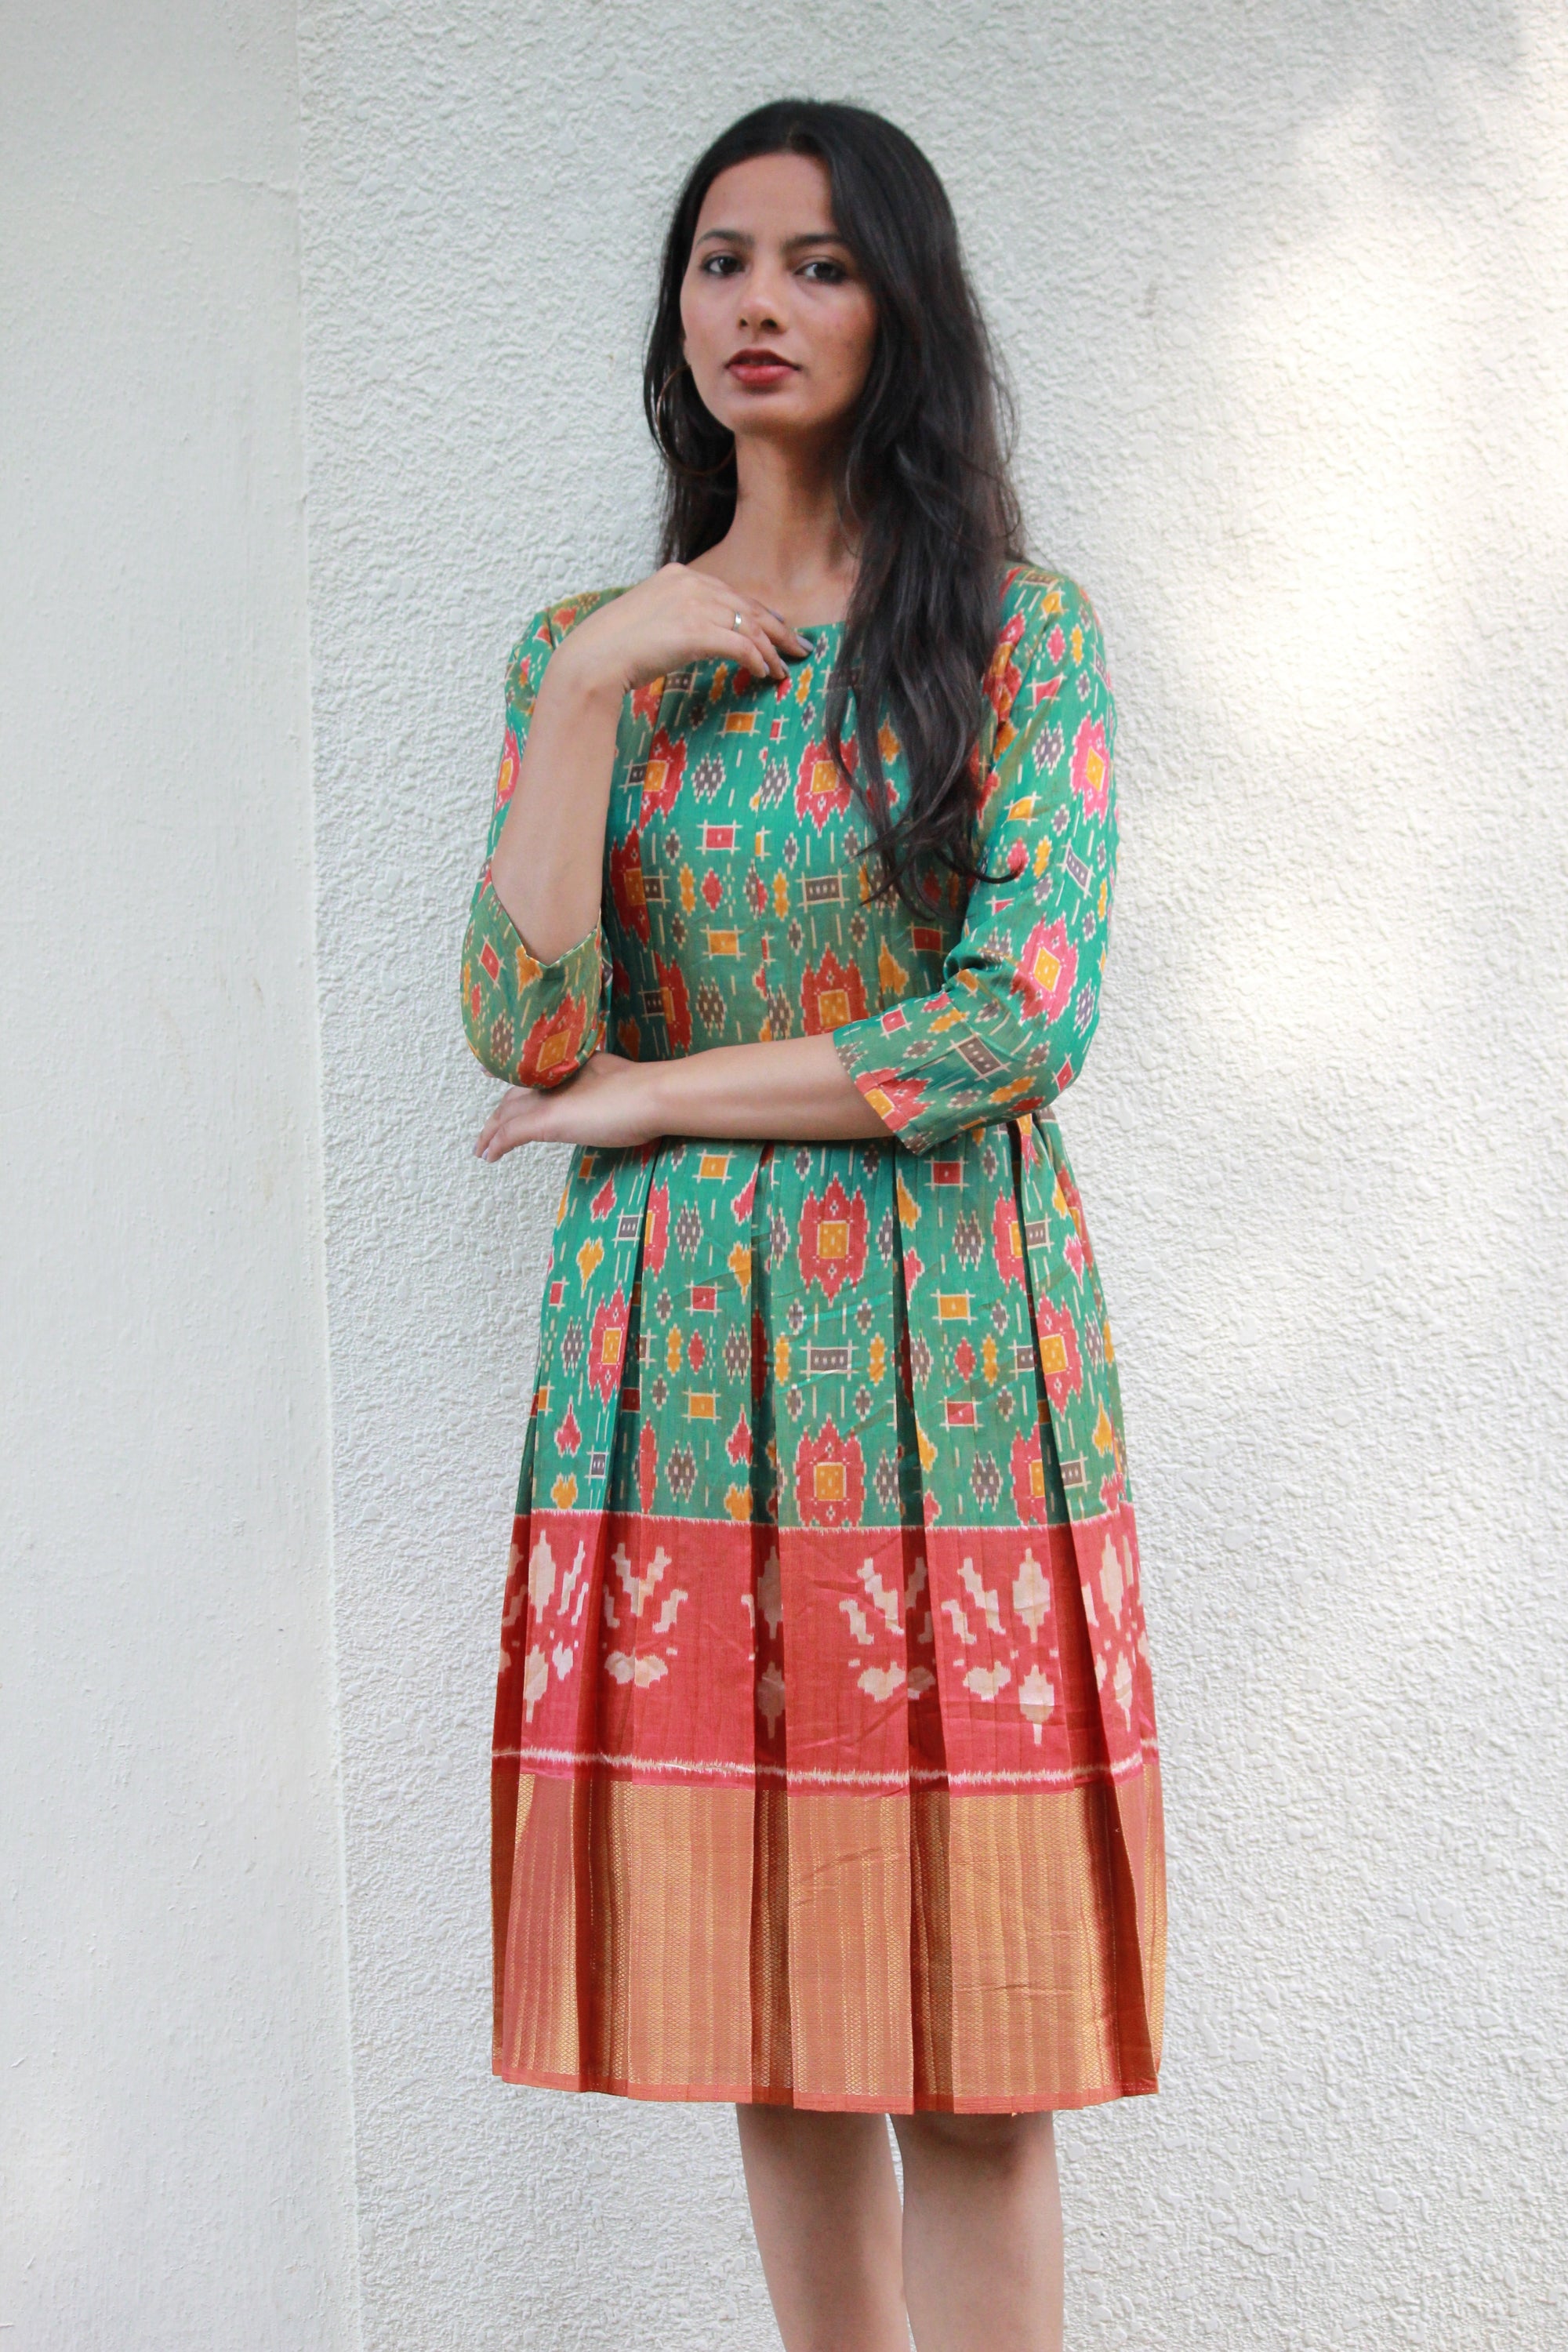 Diwali Special: Convert Your Old Saree in to Designer Festive Wear Long  Anarkali Dress - YouTube | Anarkali dress pattern, Long anarkali dress,  Long dress design